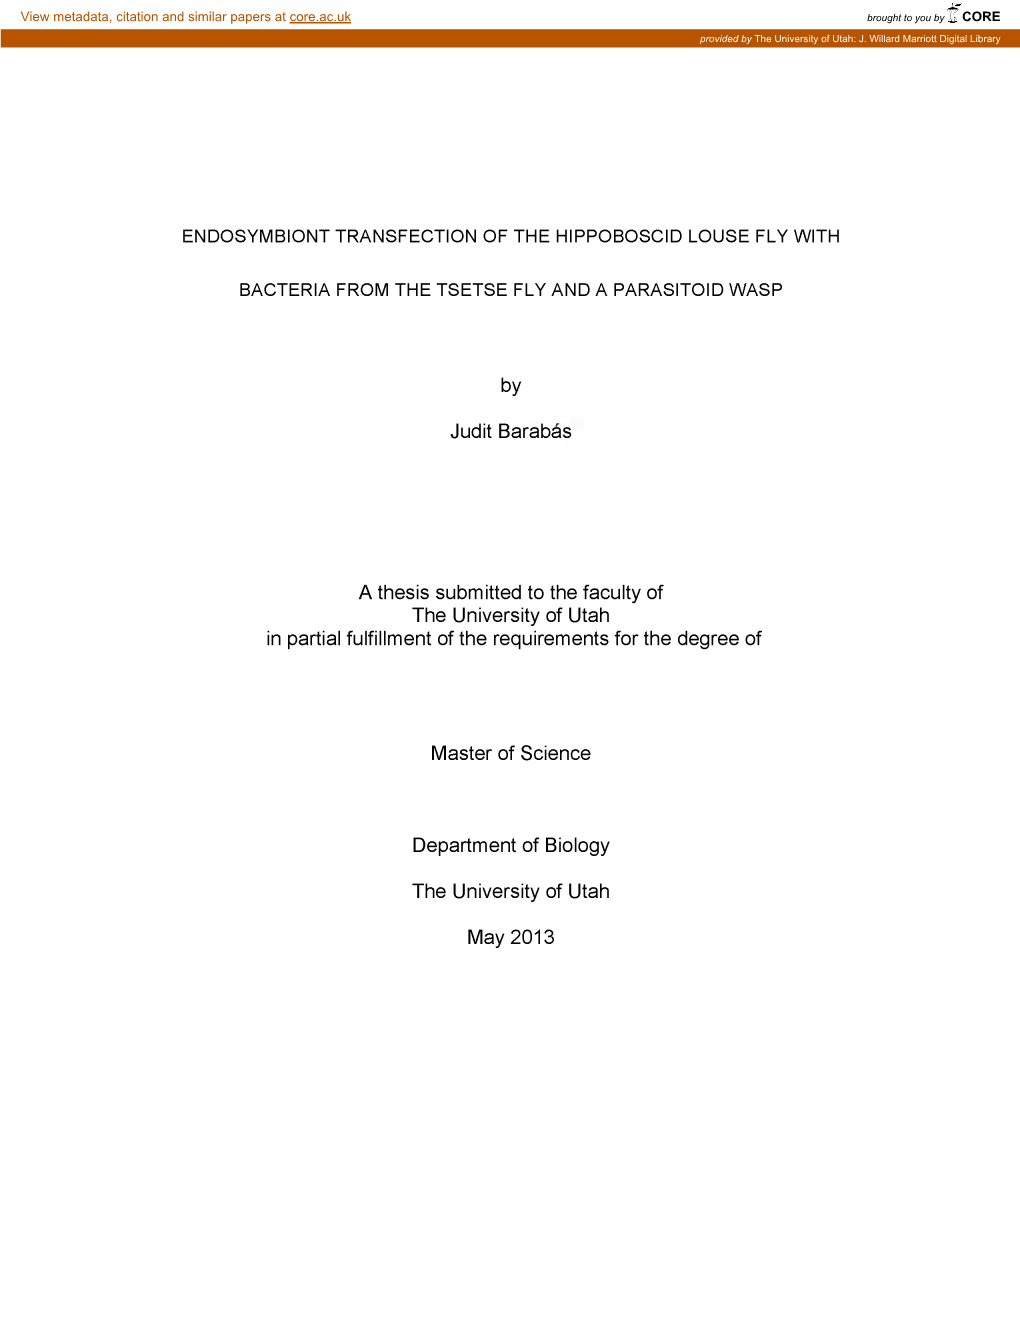 Alodaibi's Dissertation-Thesis Office Convert to PDF 2